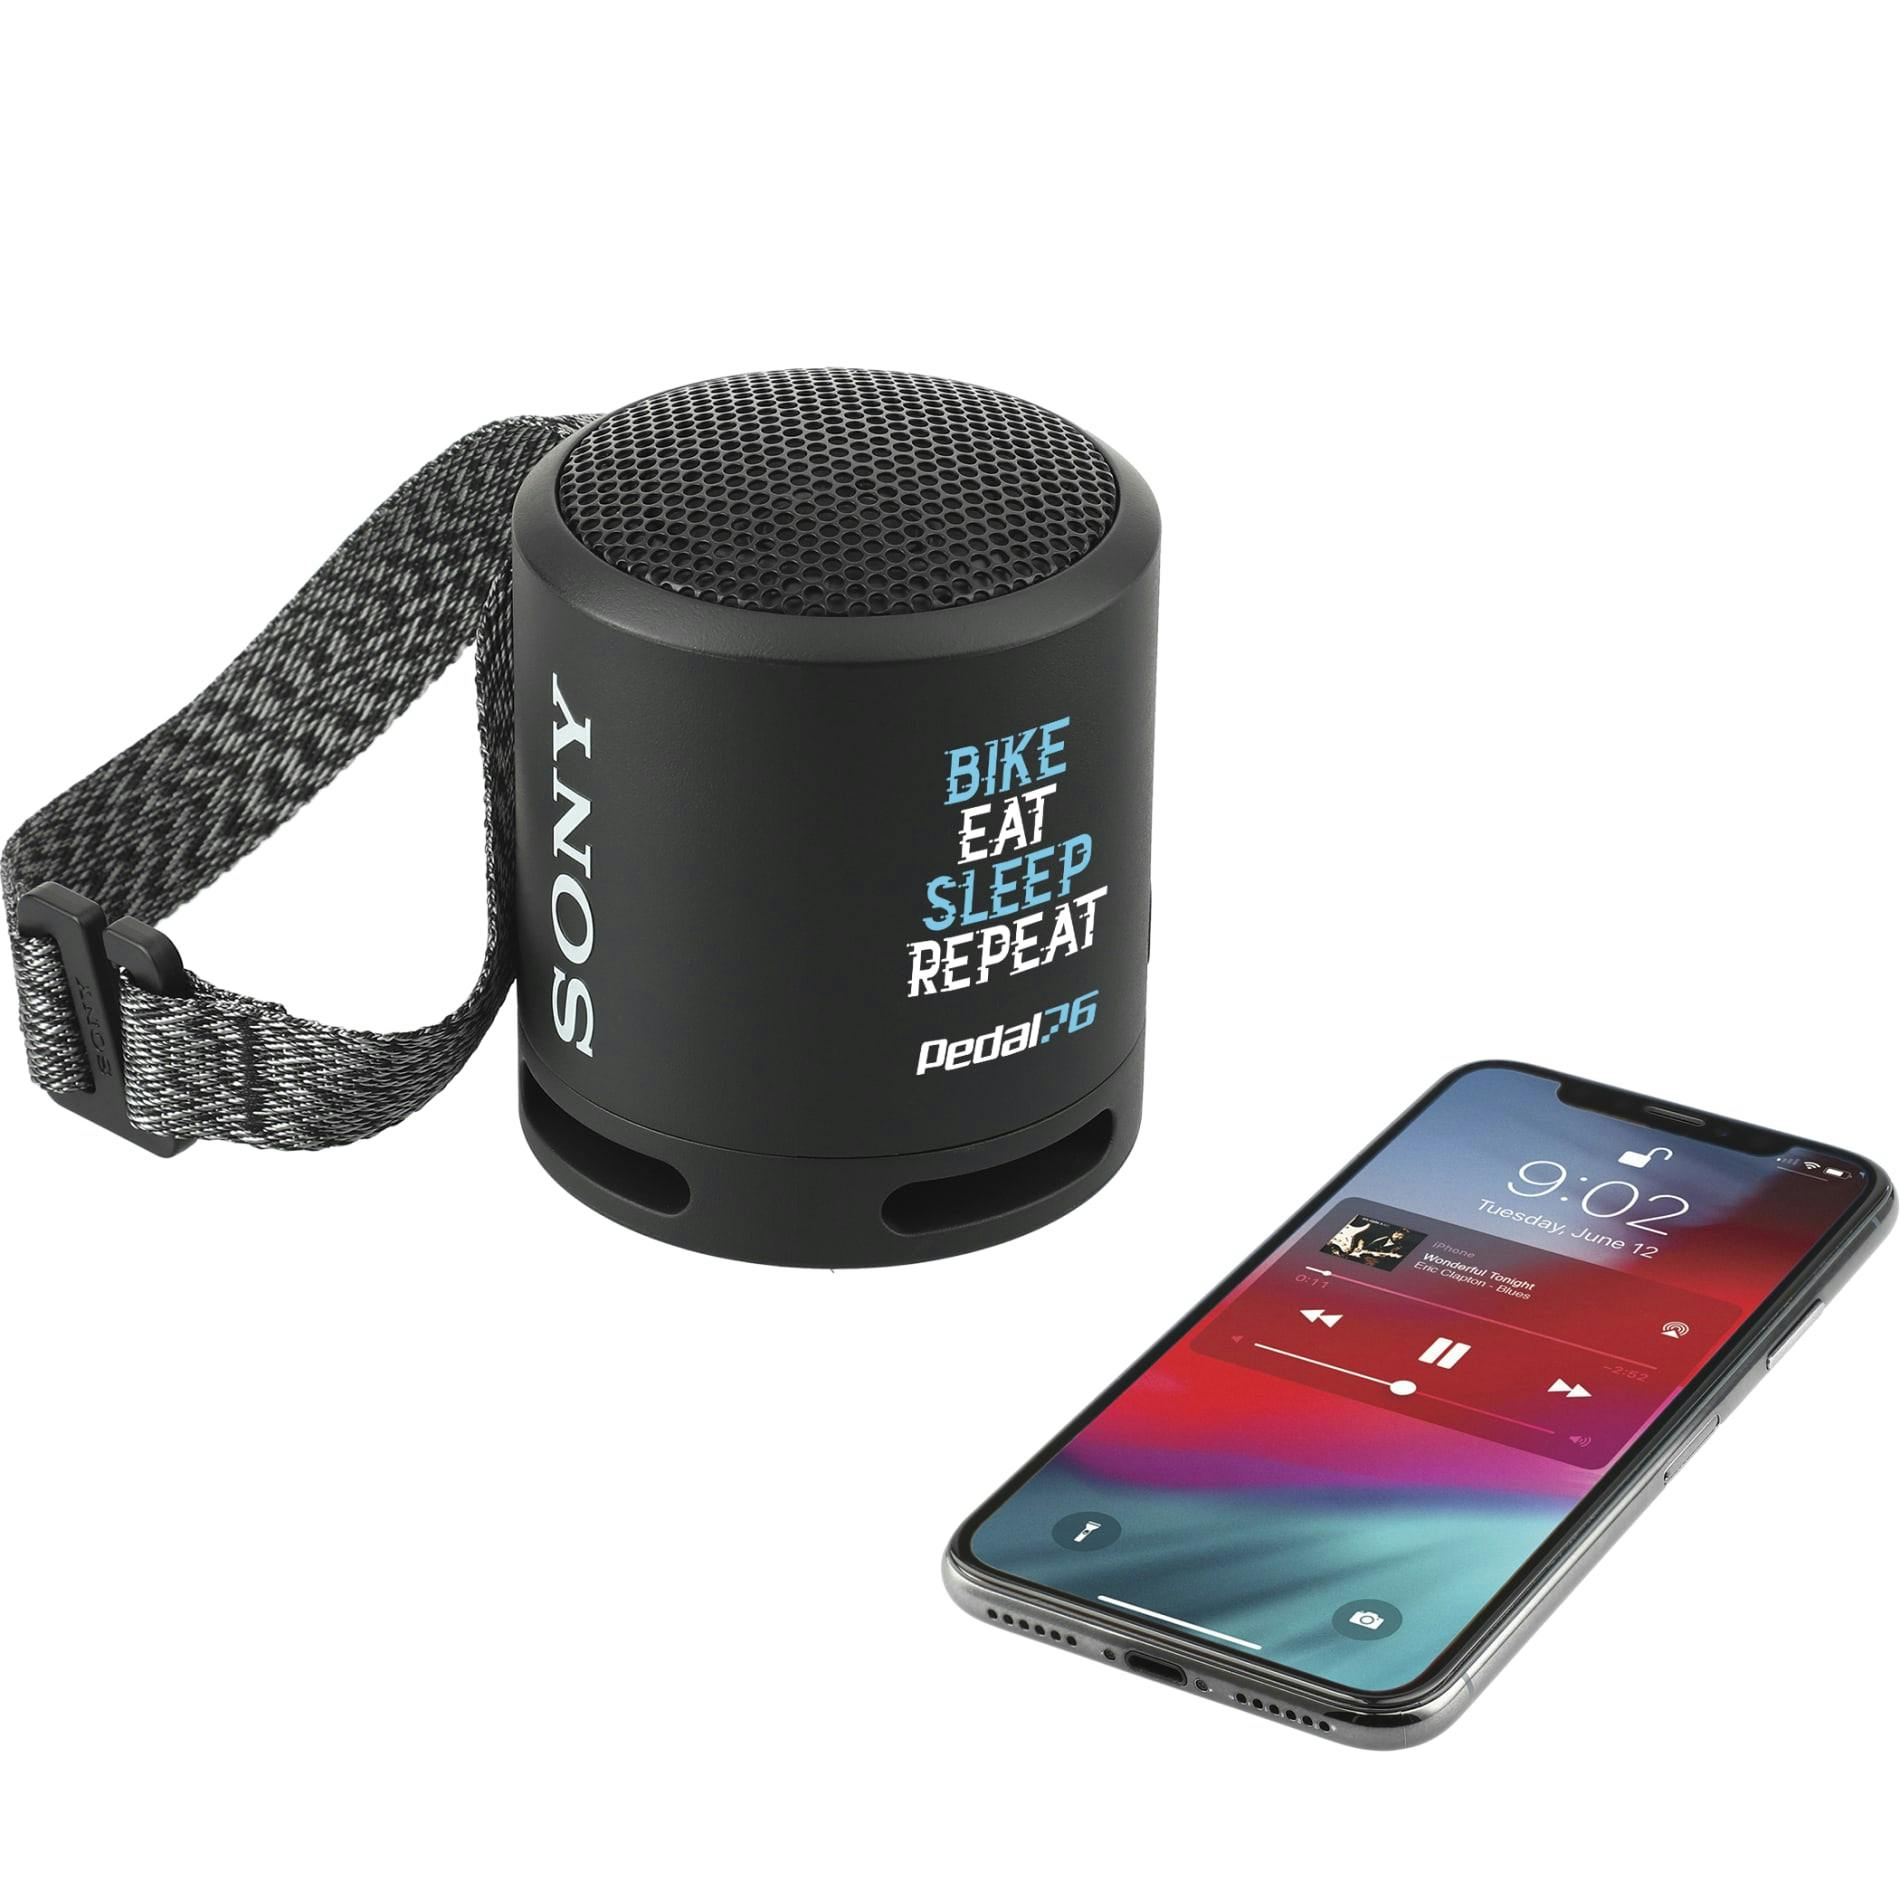 Sony SRS-XB13 Bluetooth Speaker - additional Image 3